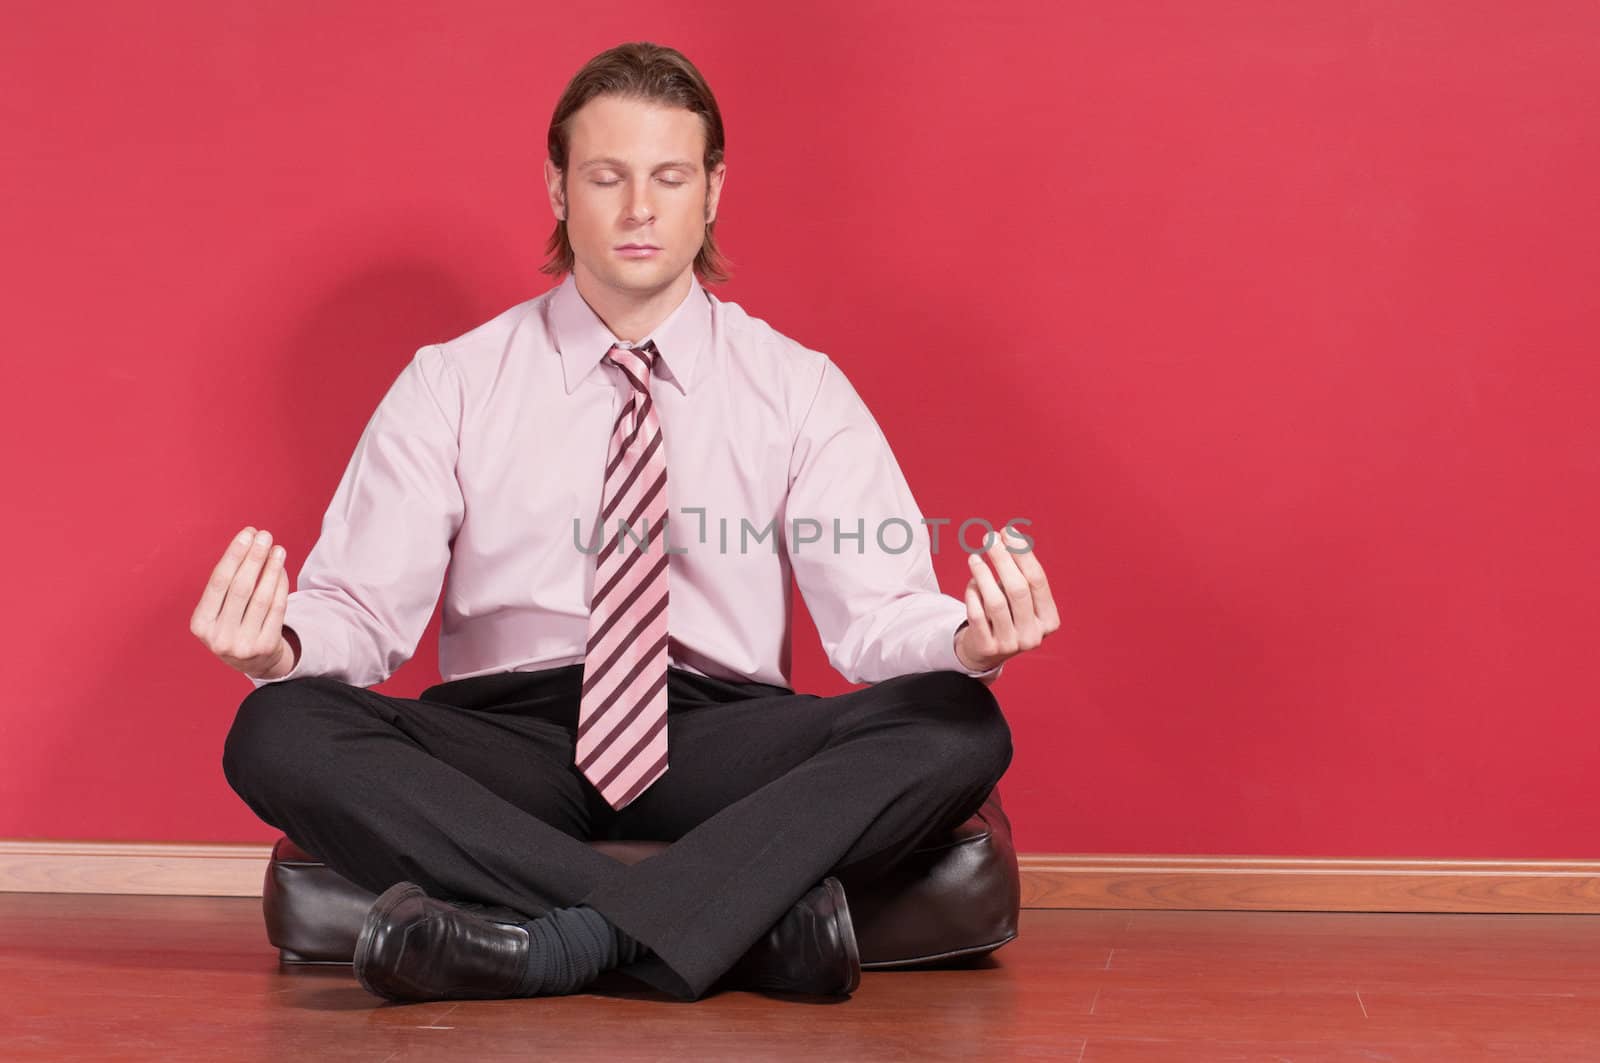 Businessman meditating in yoga lotus pose on floor